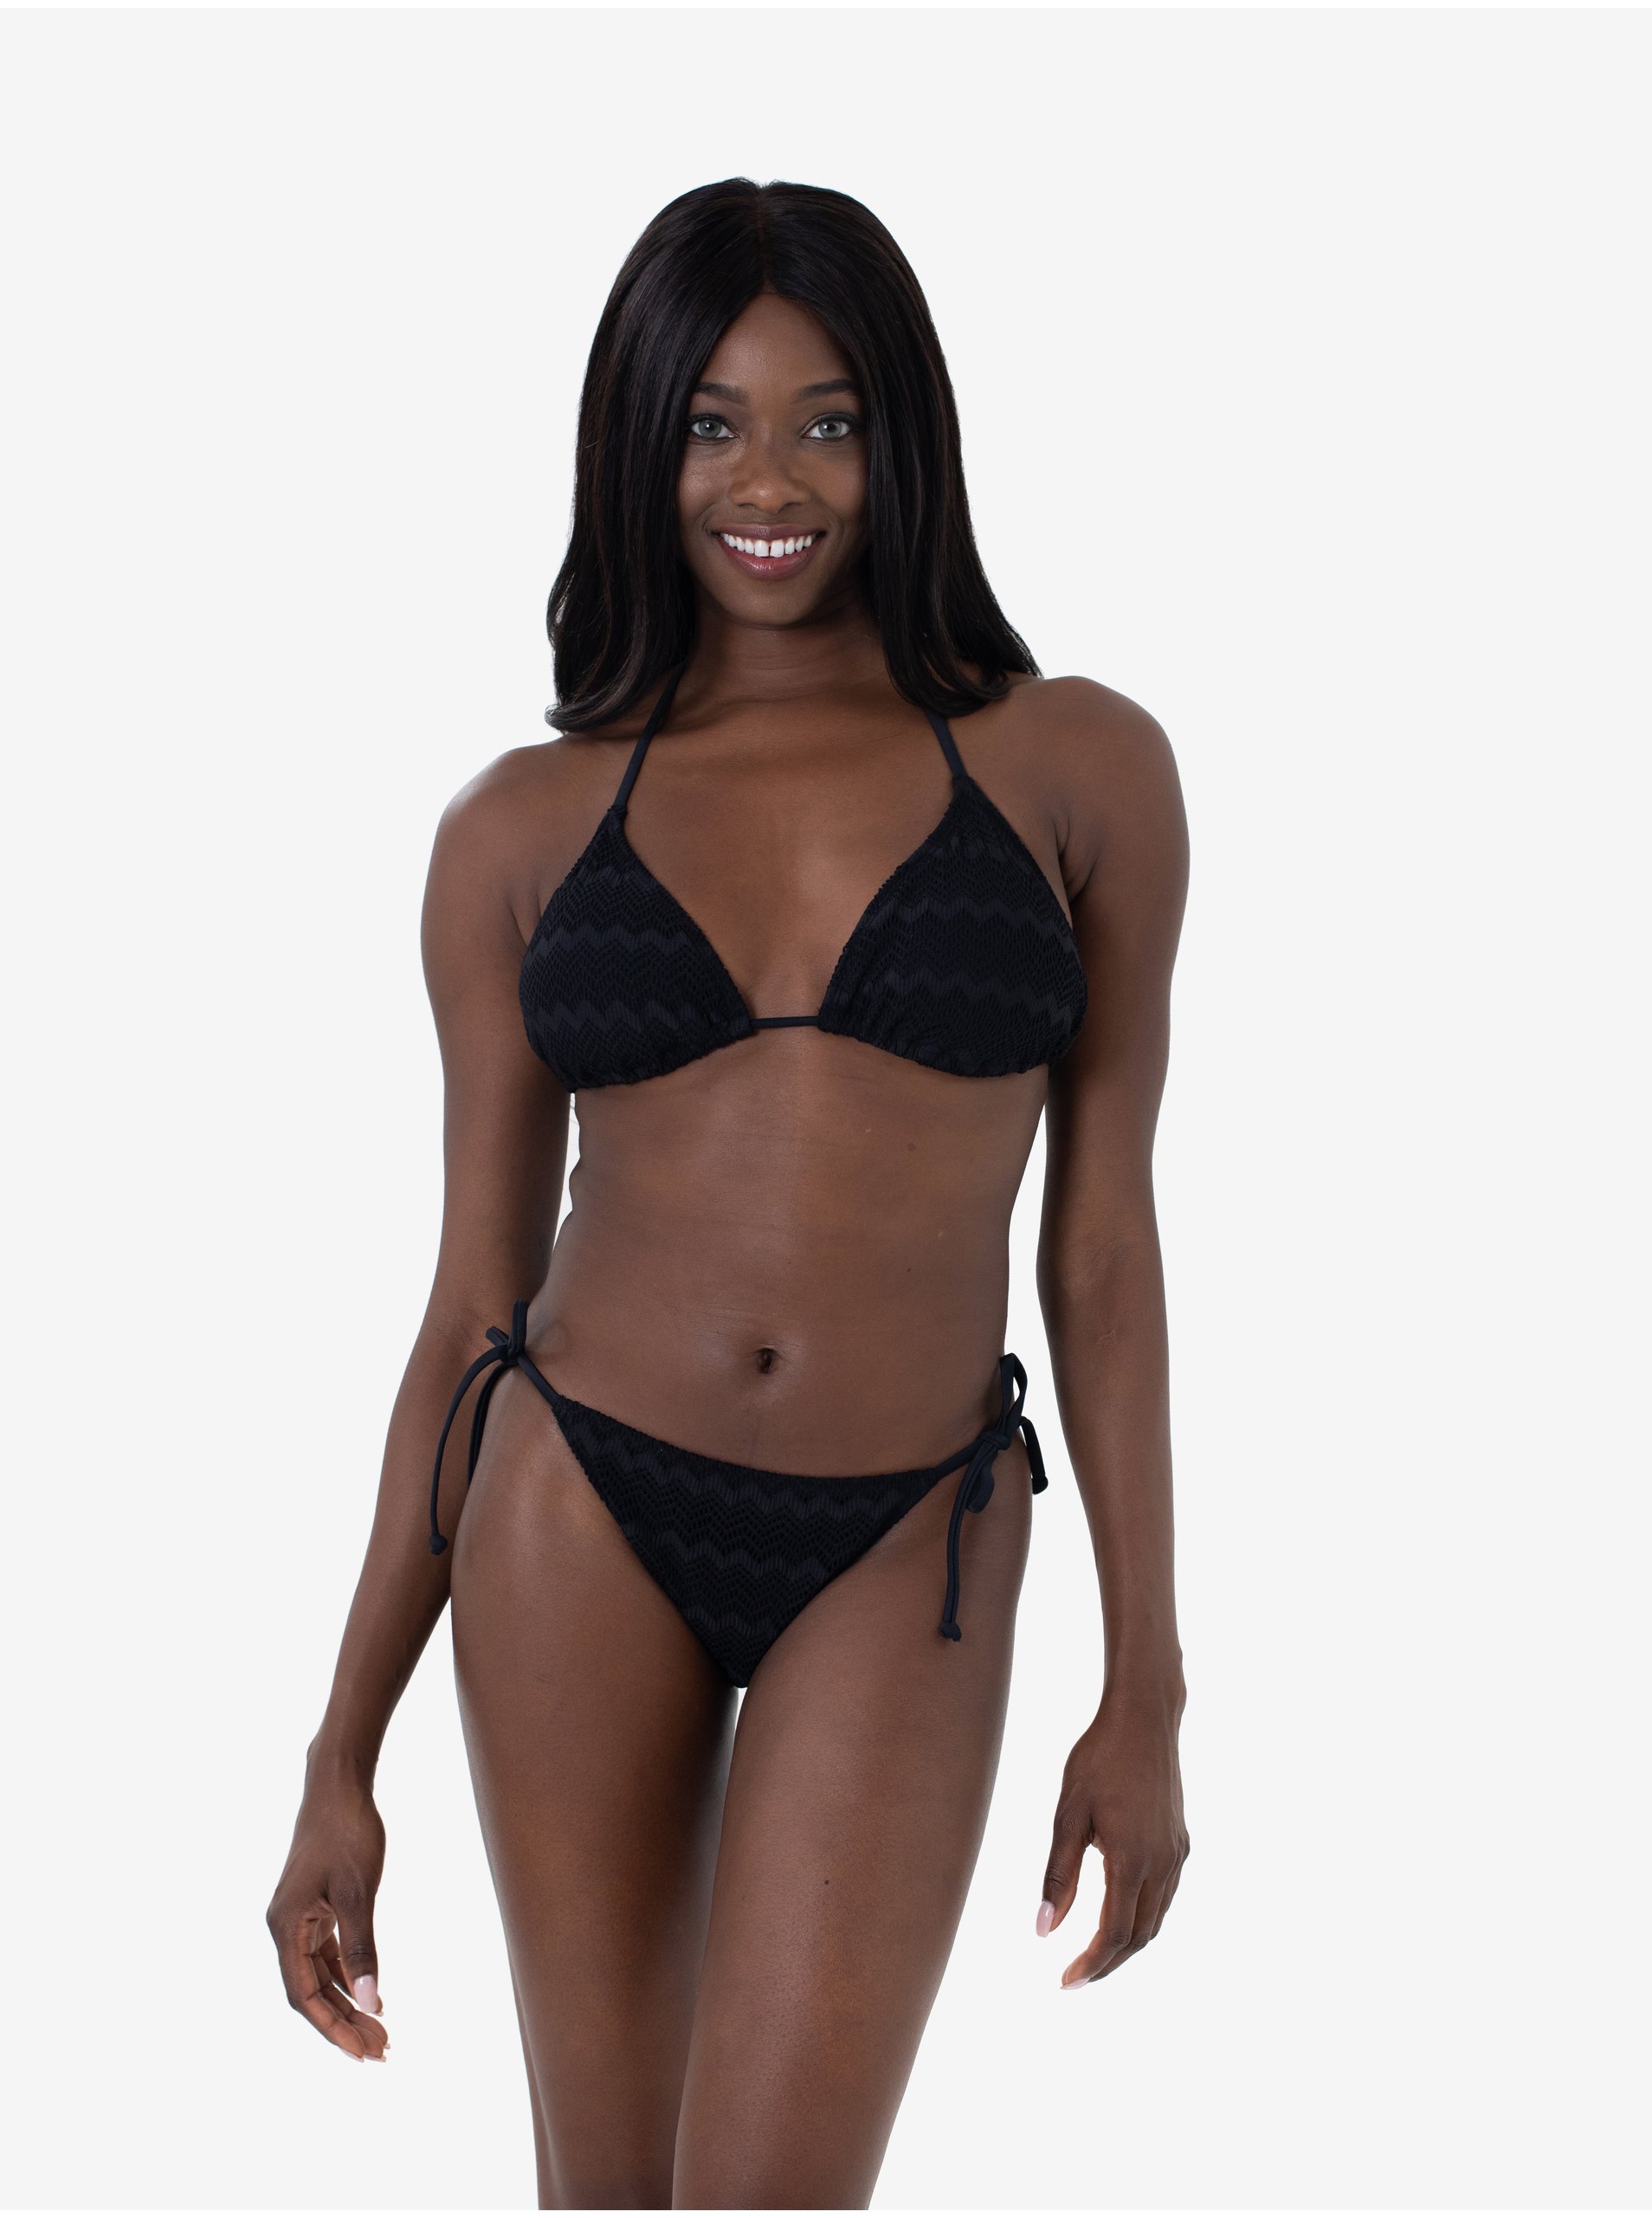 Black Women's Patterned Swimsuit Top DORINA Kubah - Women